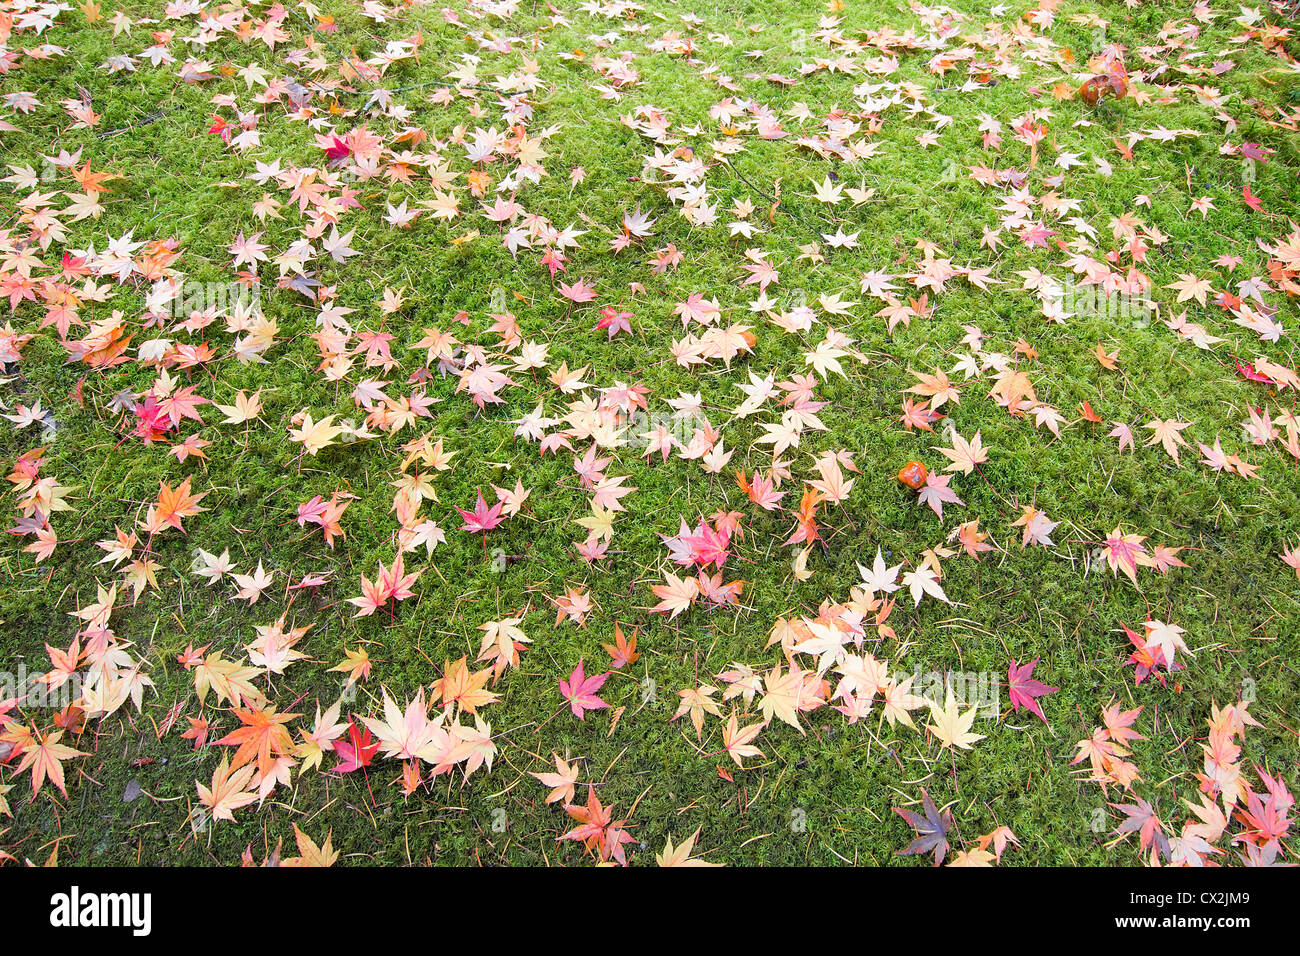 Fallen Maple Tree Leaves on Field of Moss in Autumn Background Stock Photo